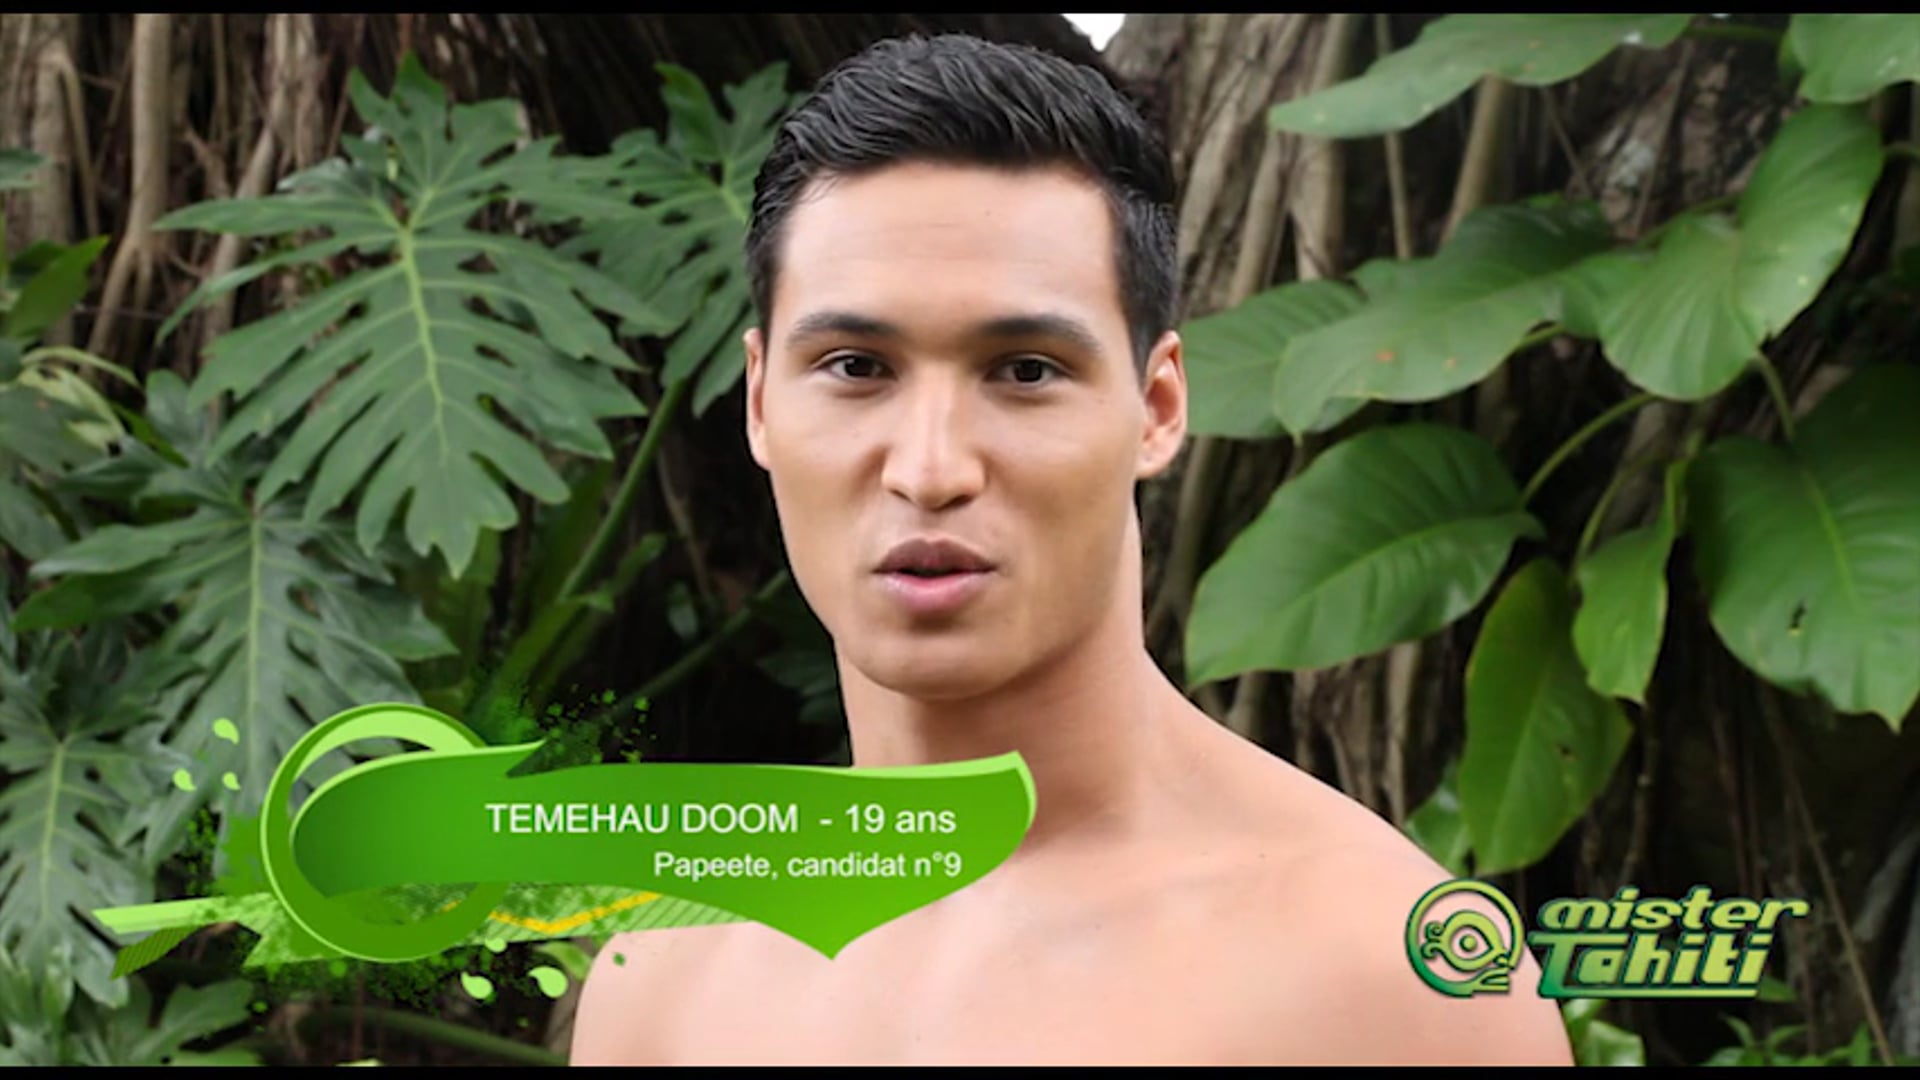 MISTER TAHITI 2017 - Candidat n°9 - Temehau